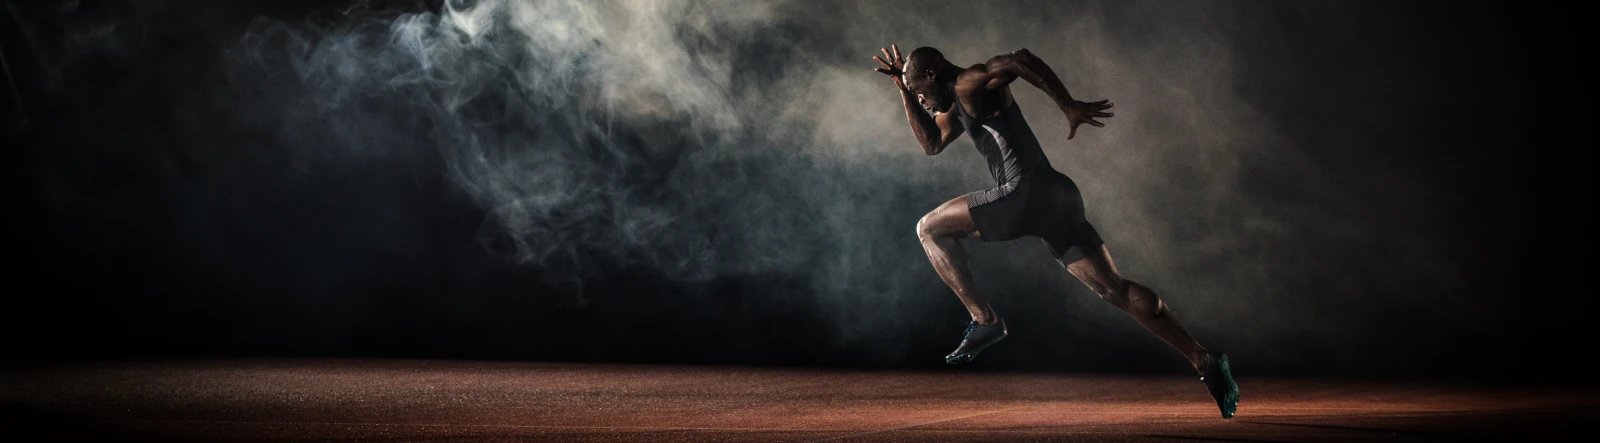 a sprinter running on a track in the dark through lit smoke